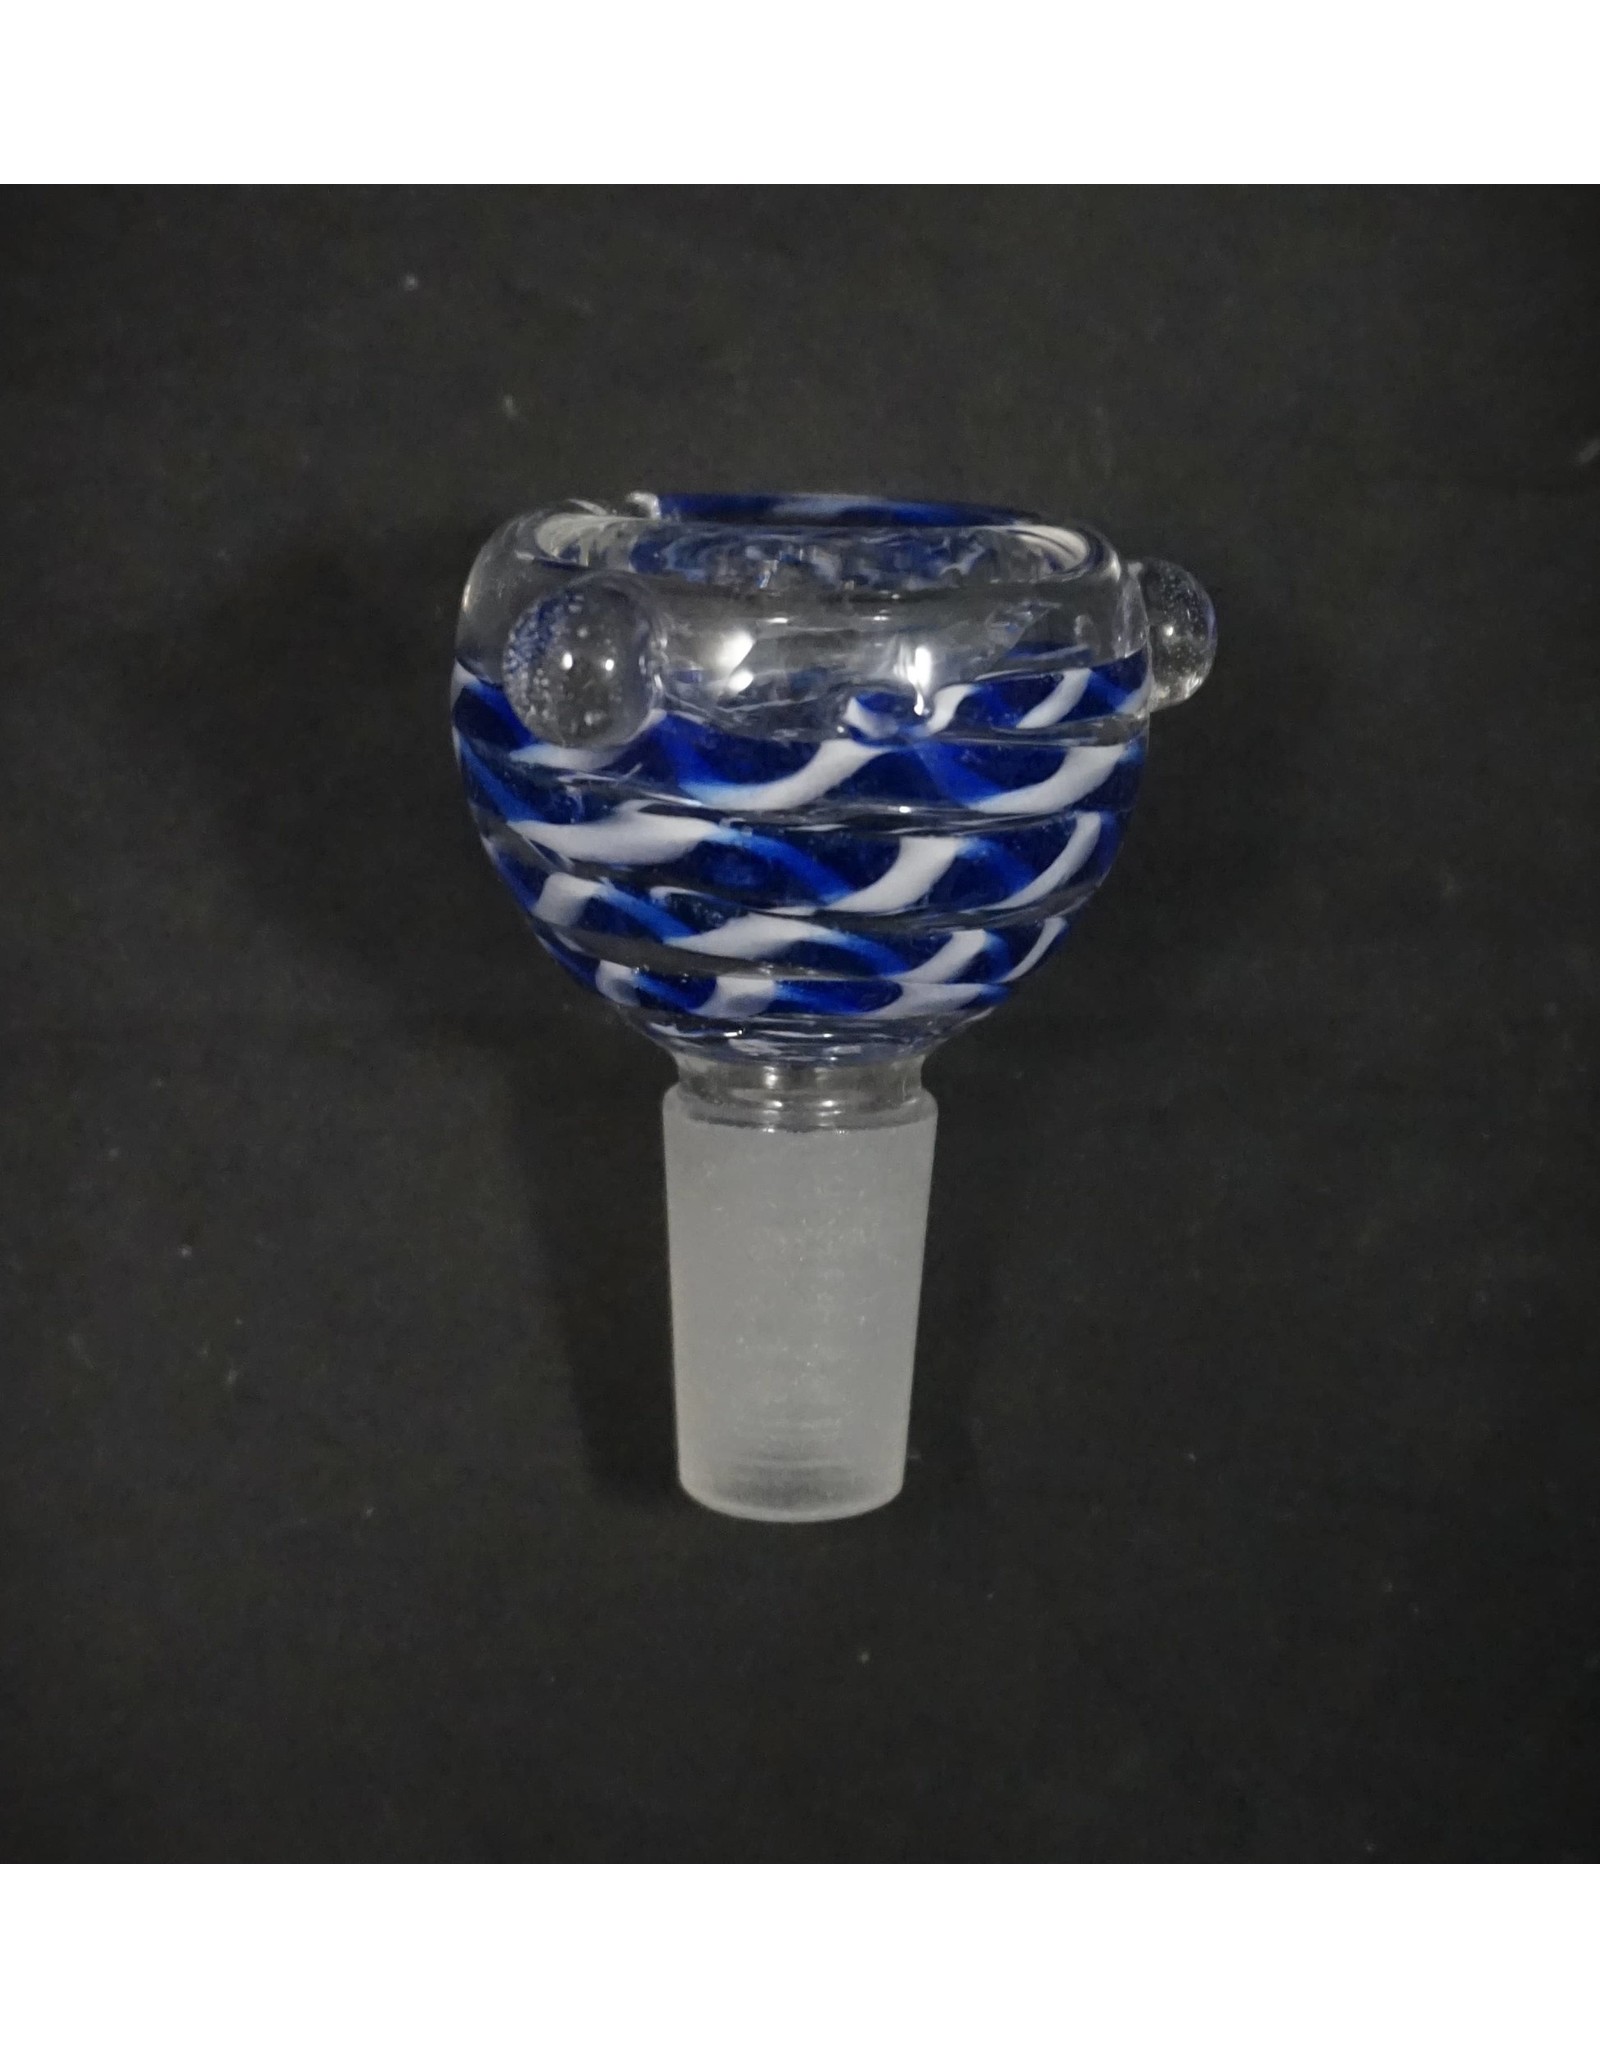 Male Glass on Glass Slide Bowl - 14mm Male